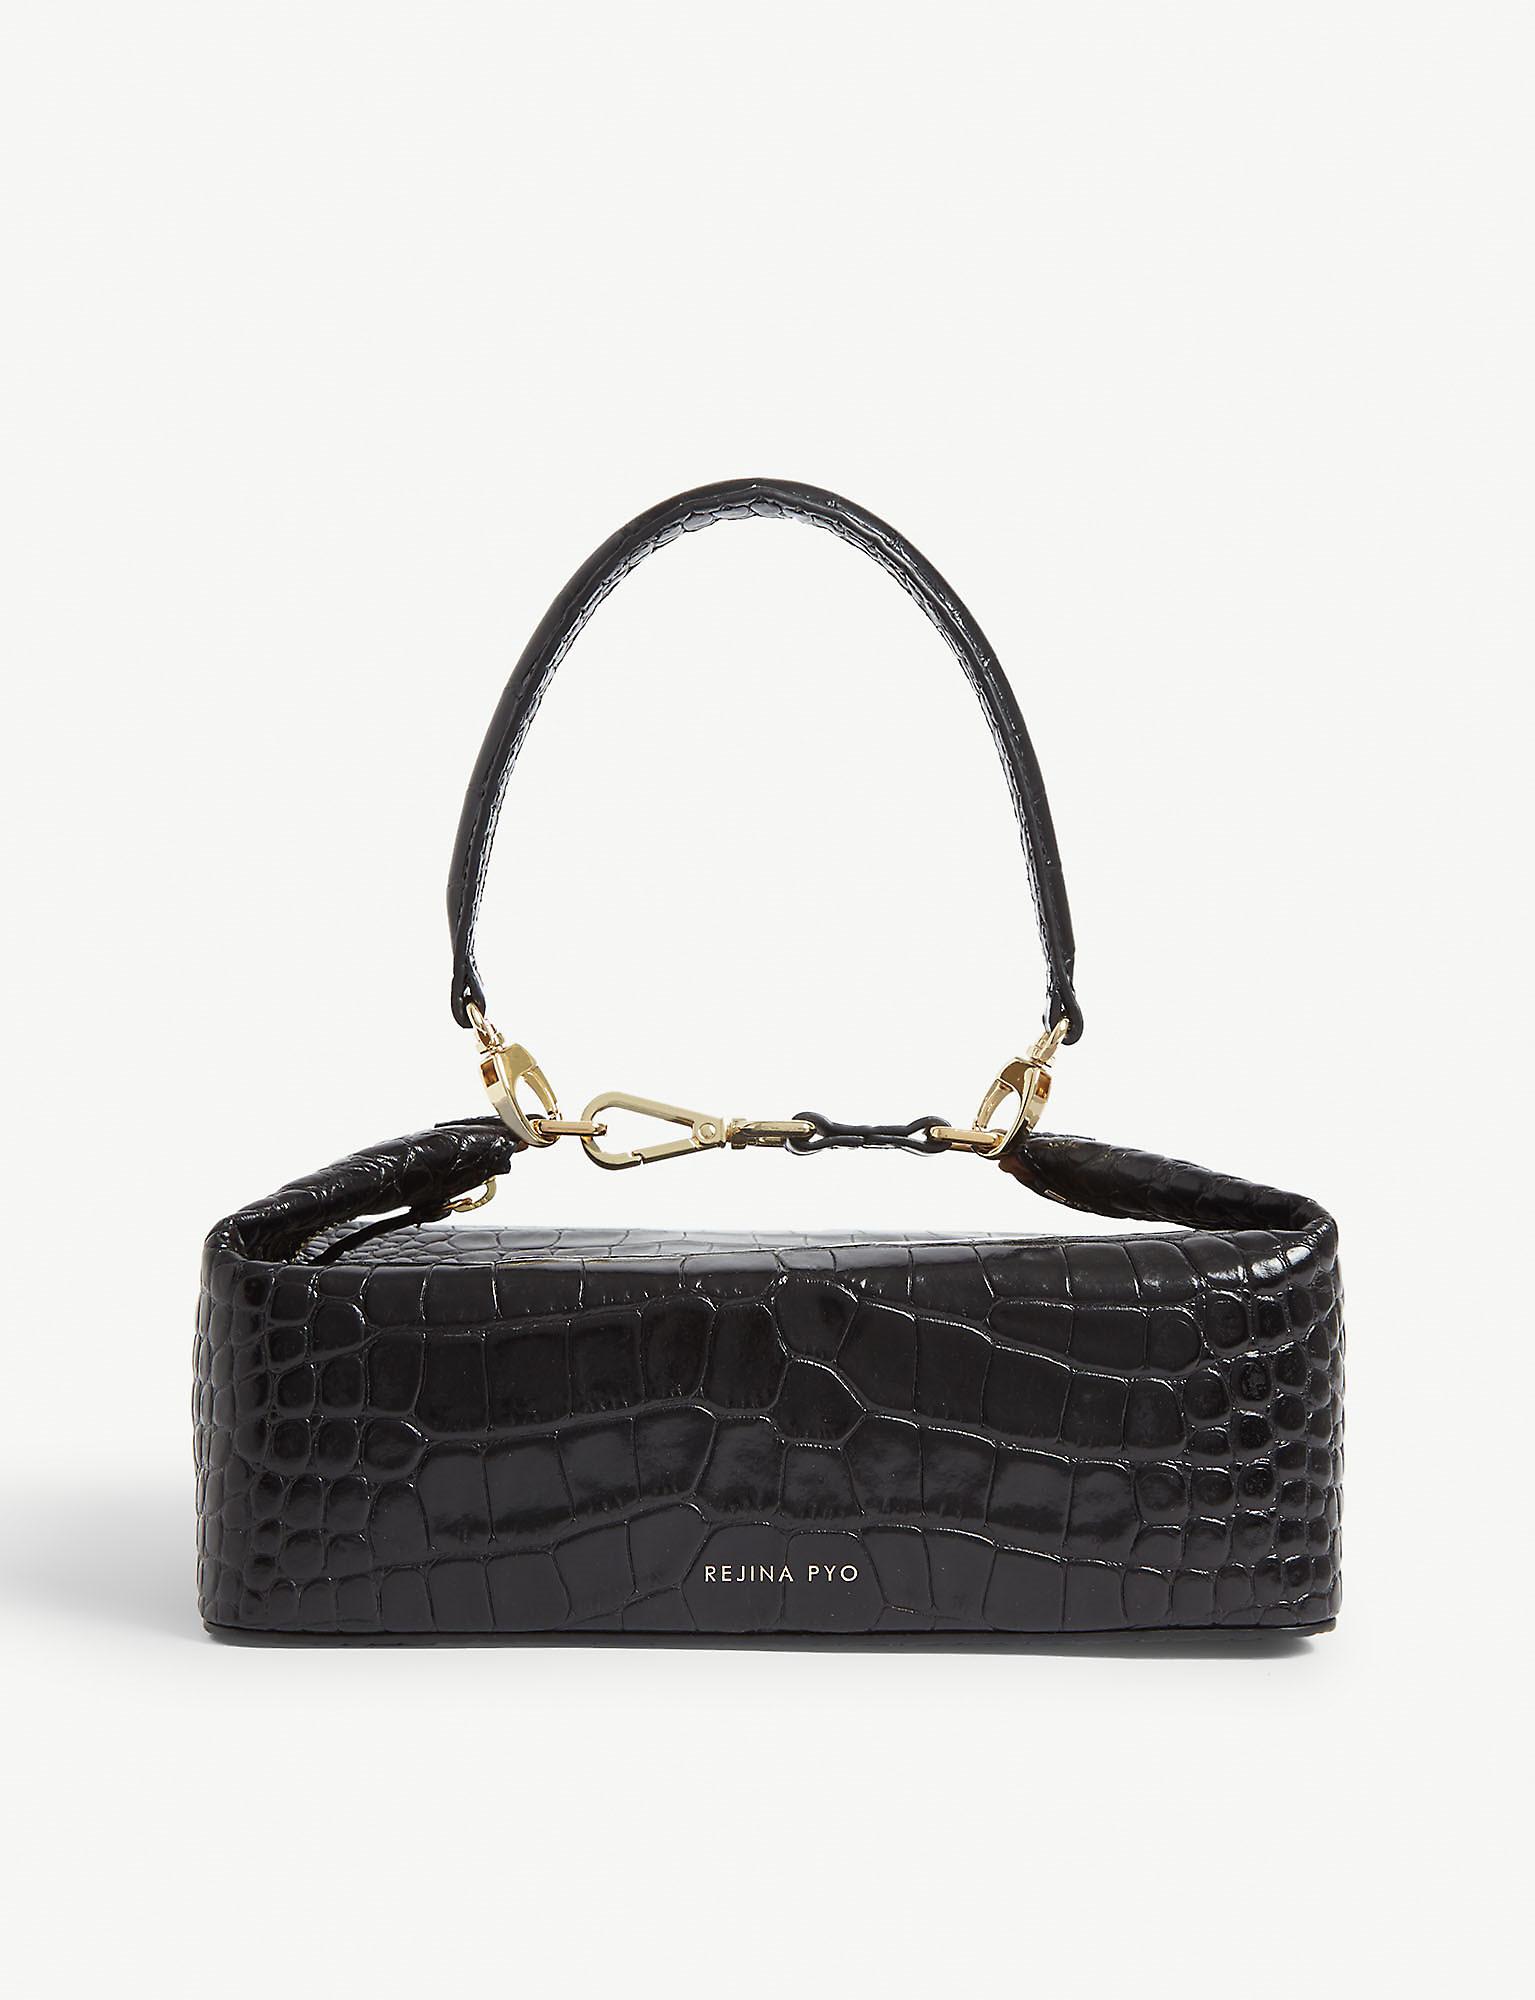 Rejina Pyo Leather Olivia Box Bag in Black - Lyst